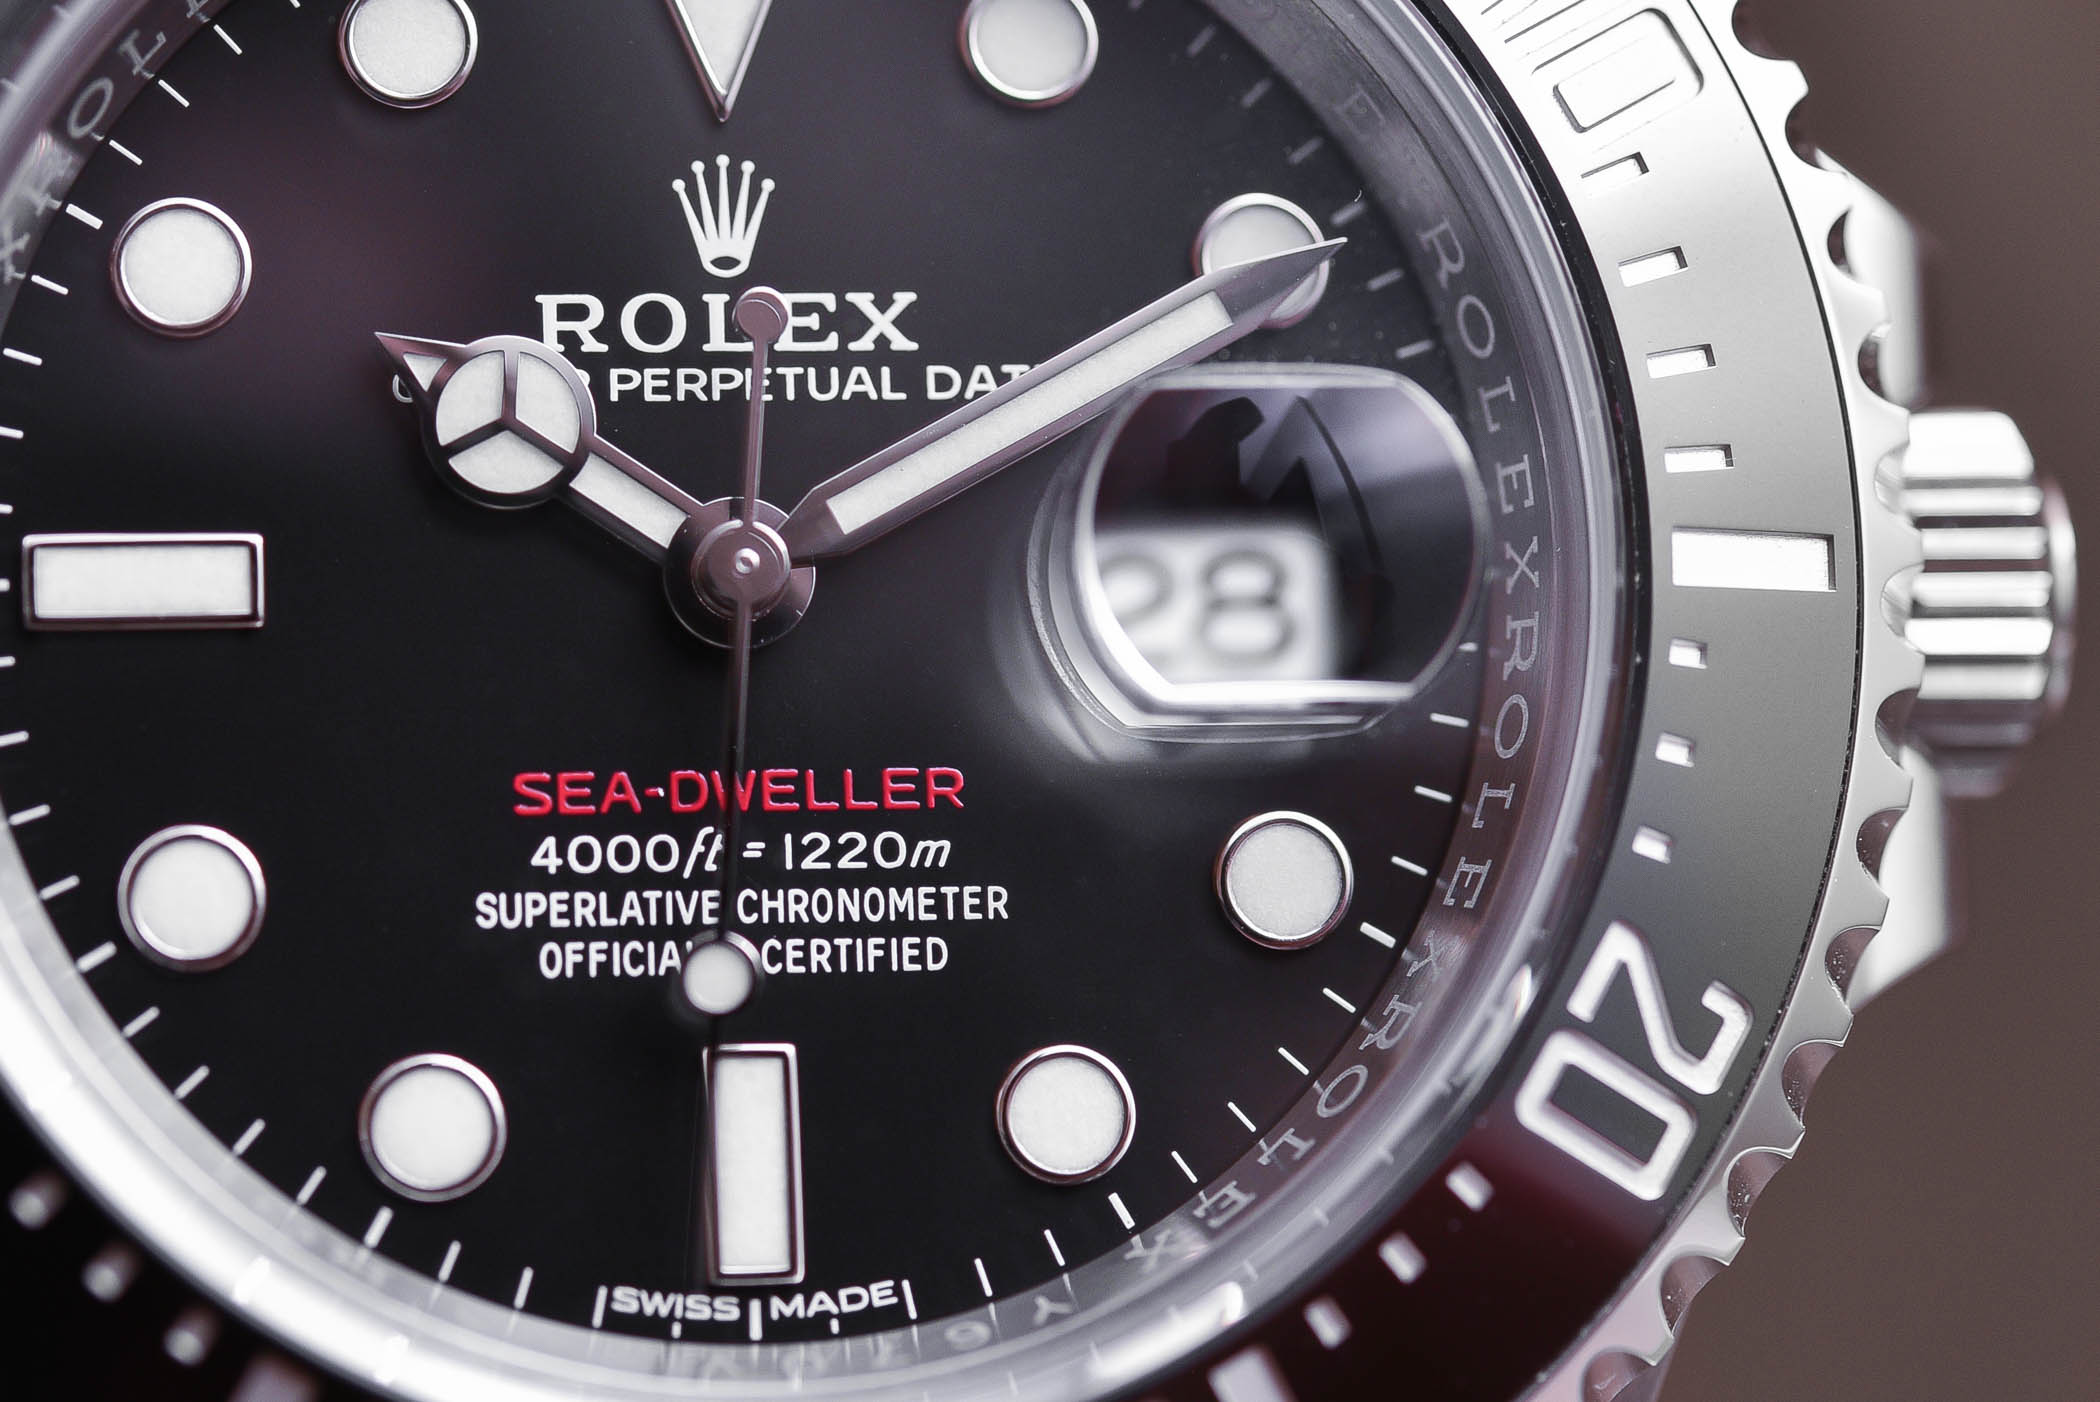 Rolex Sea-Dweller 43mm 126600 - Baselworld 2017 Review